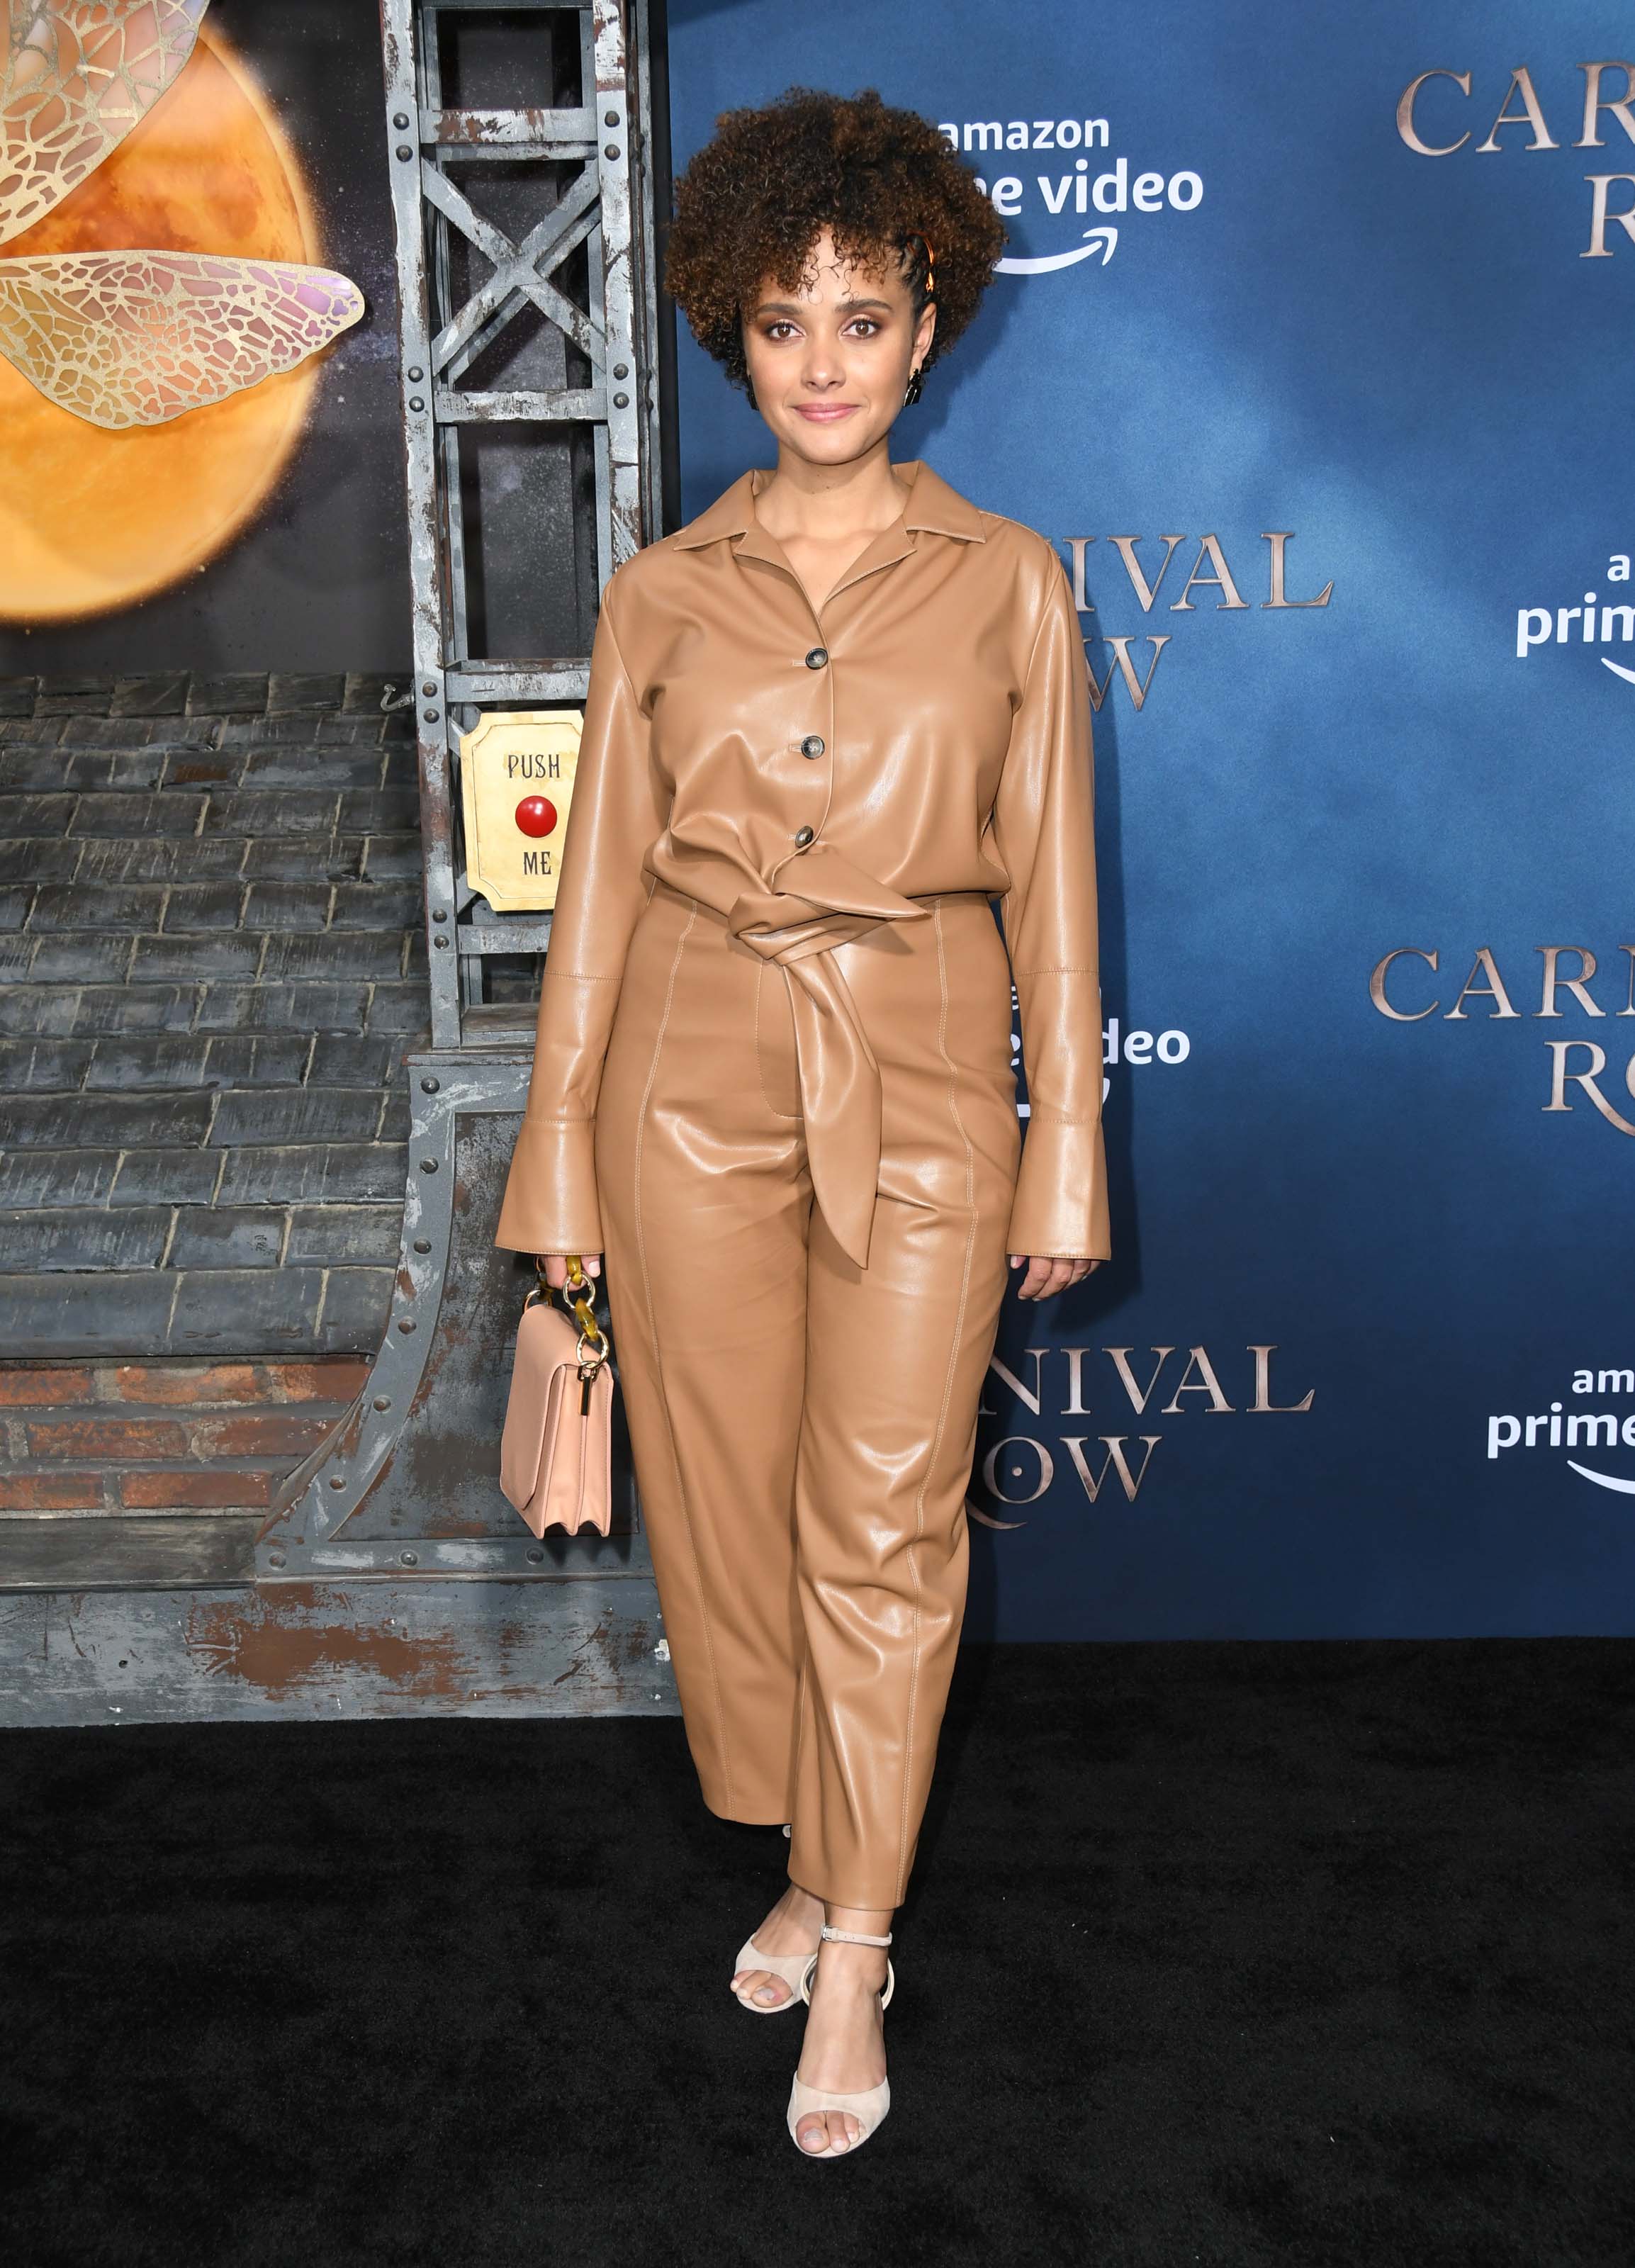 Karla Crome attends Carnival Row TV show premiere